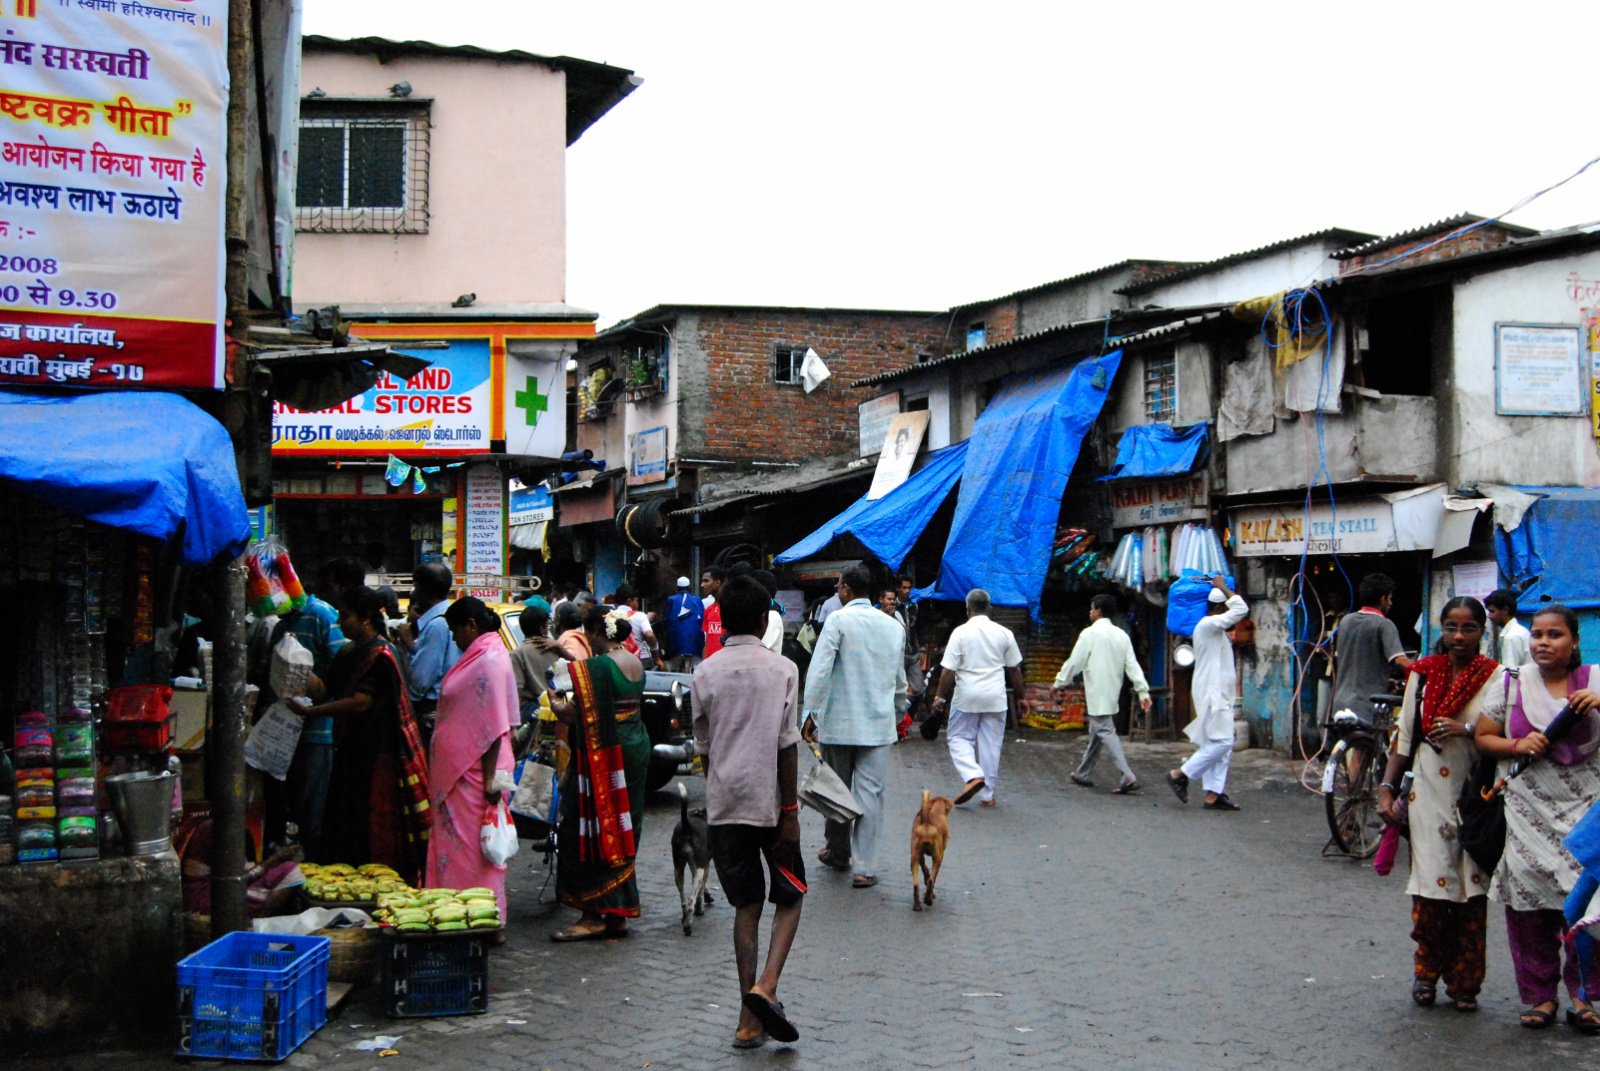 How to stroll through the Dharavi slums in Mumbai